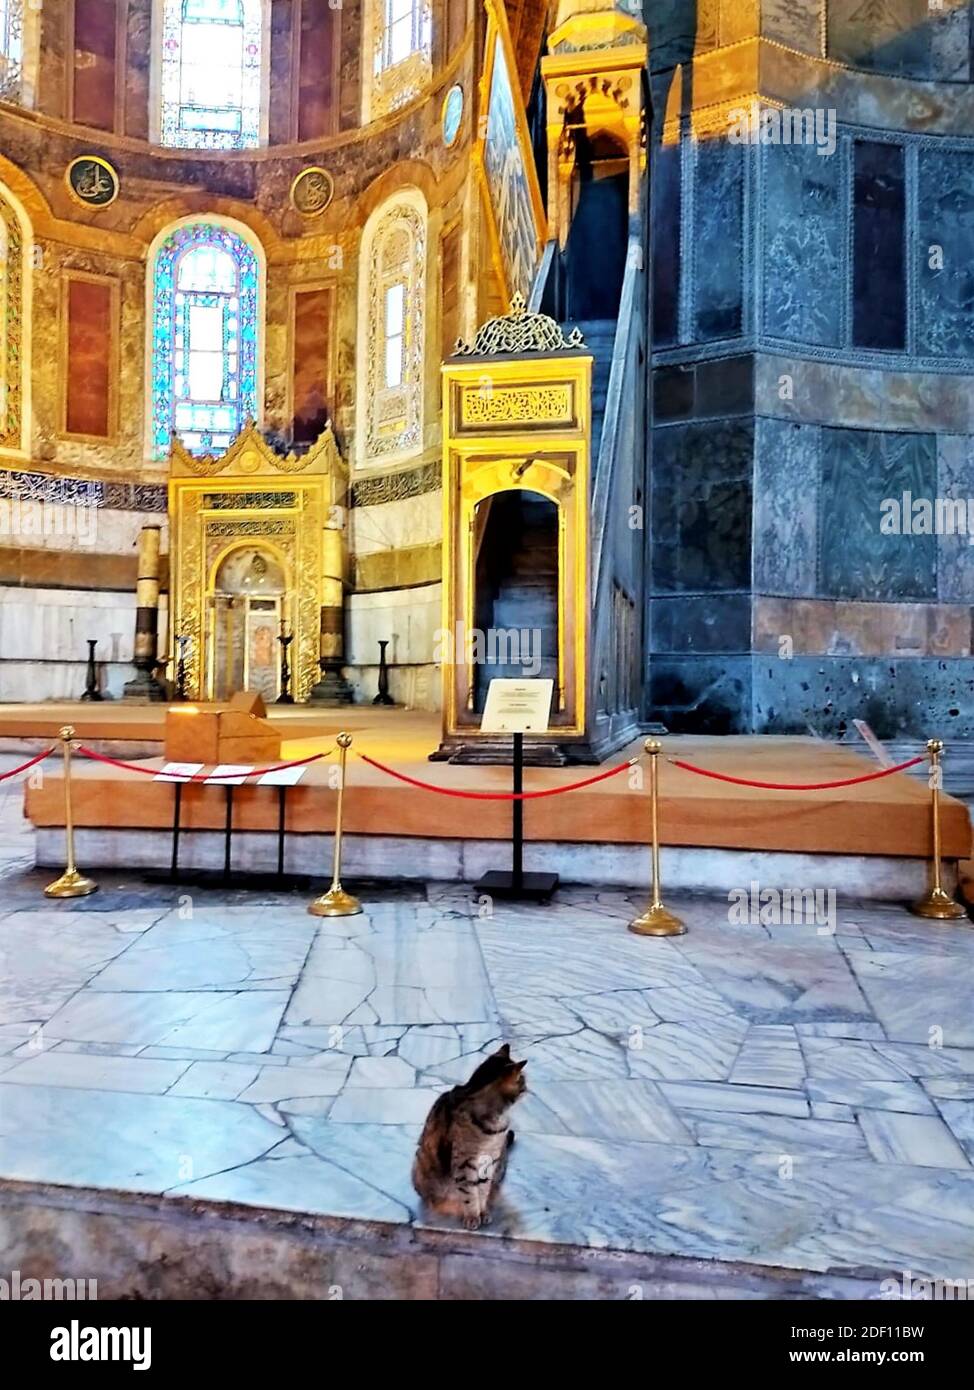 Hagia Sophia Museum and cat Gli., Byzantine architecture, famous landmark and architectural wonder of the World Istanbul, Turkey Stock Photo